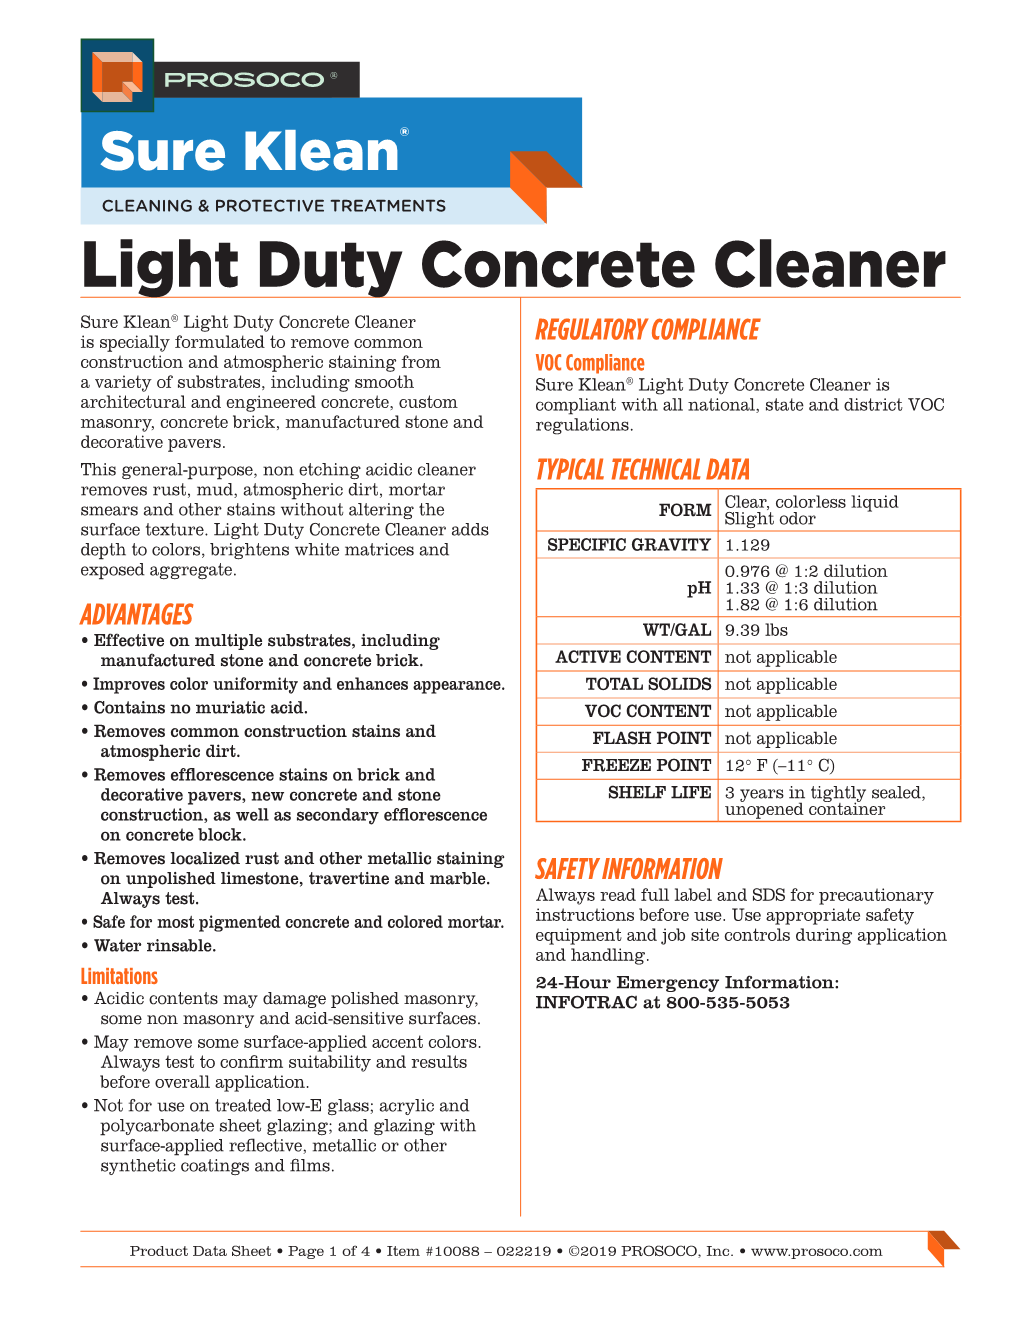 Light Duty Concrete Cleaner